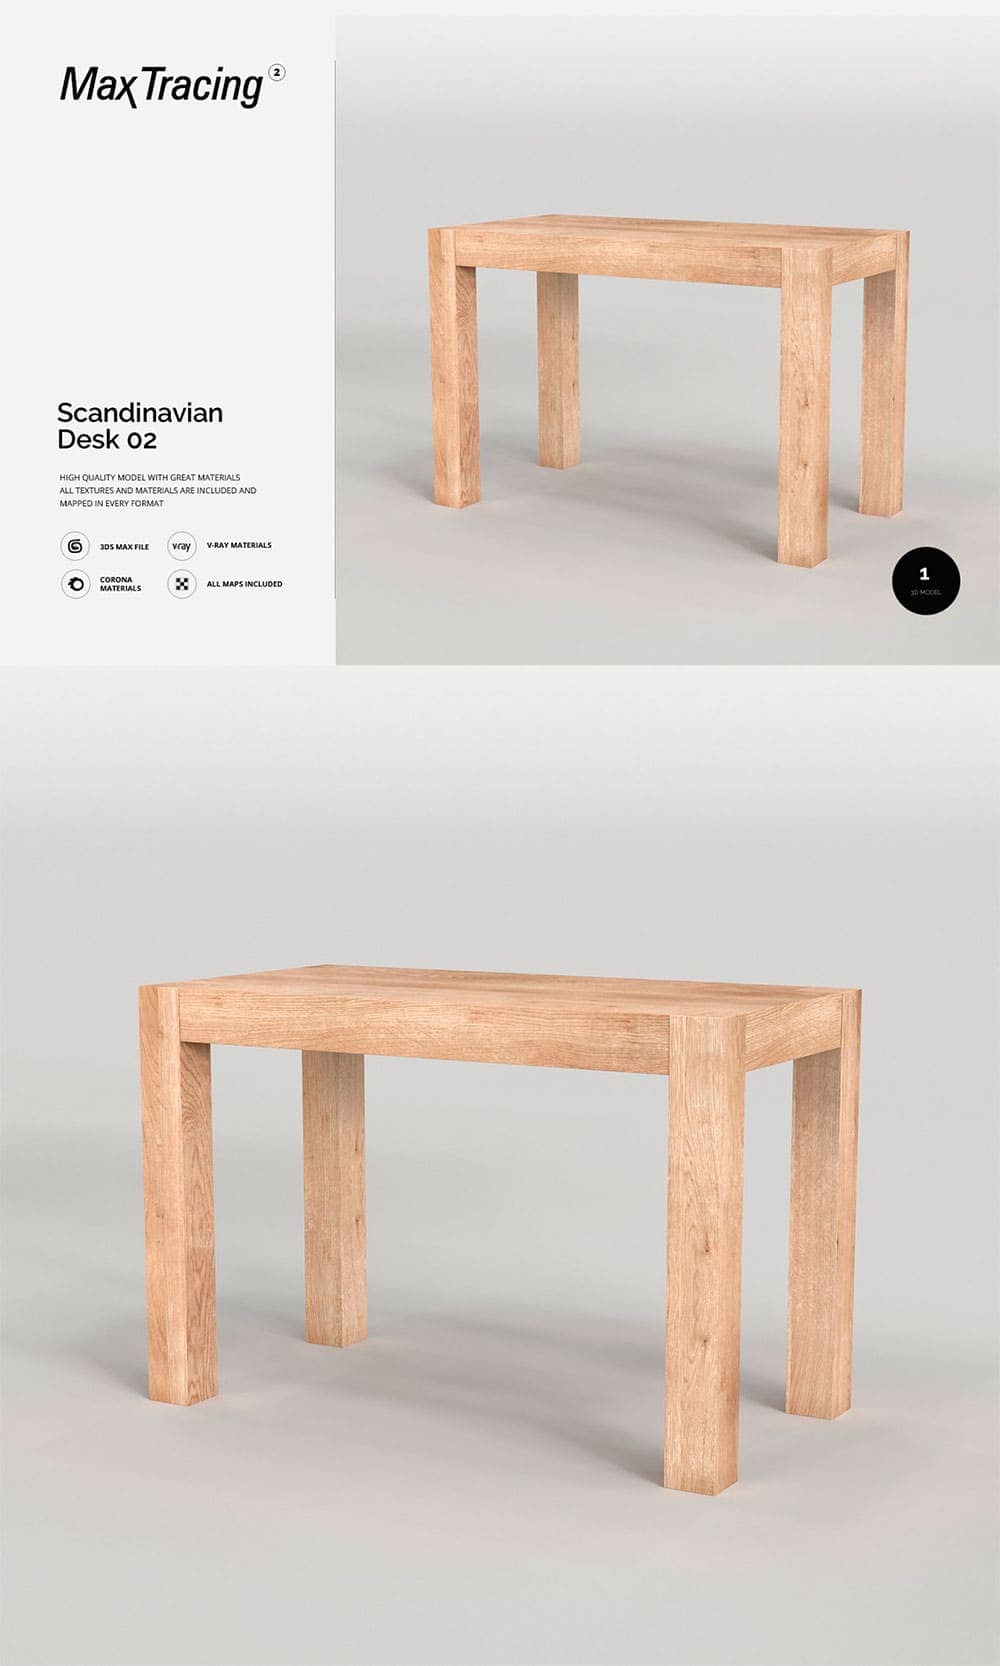 Scandinavian desk 02, picture for pinterest.